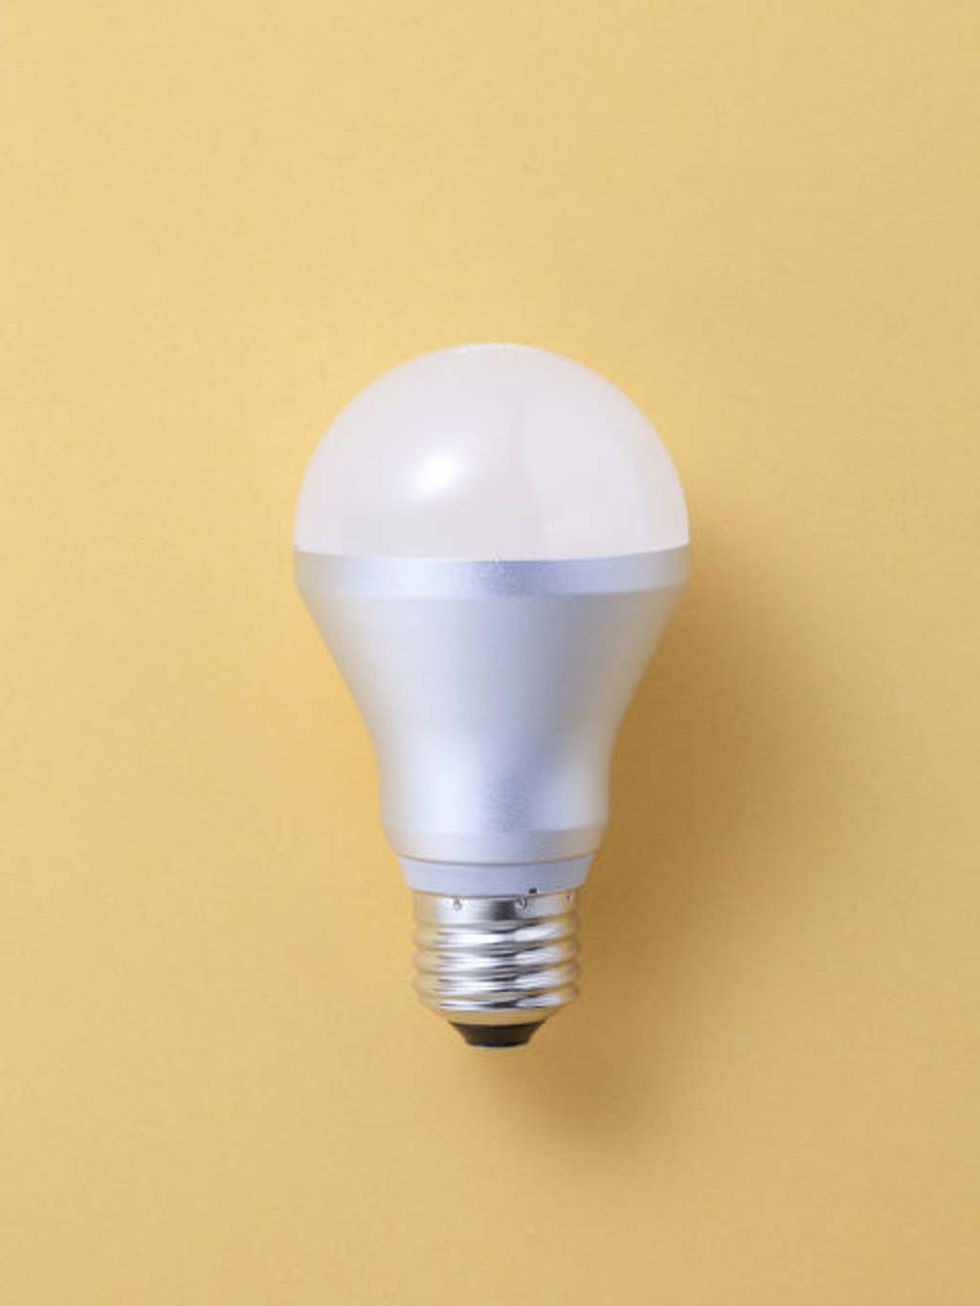 Light bulb, Incandescent light bulb, Lighting, Light, Compact fluorescent lamp, Lamp, Light fixture, Fluorescent lamp, Nightlight, 